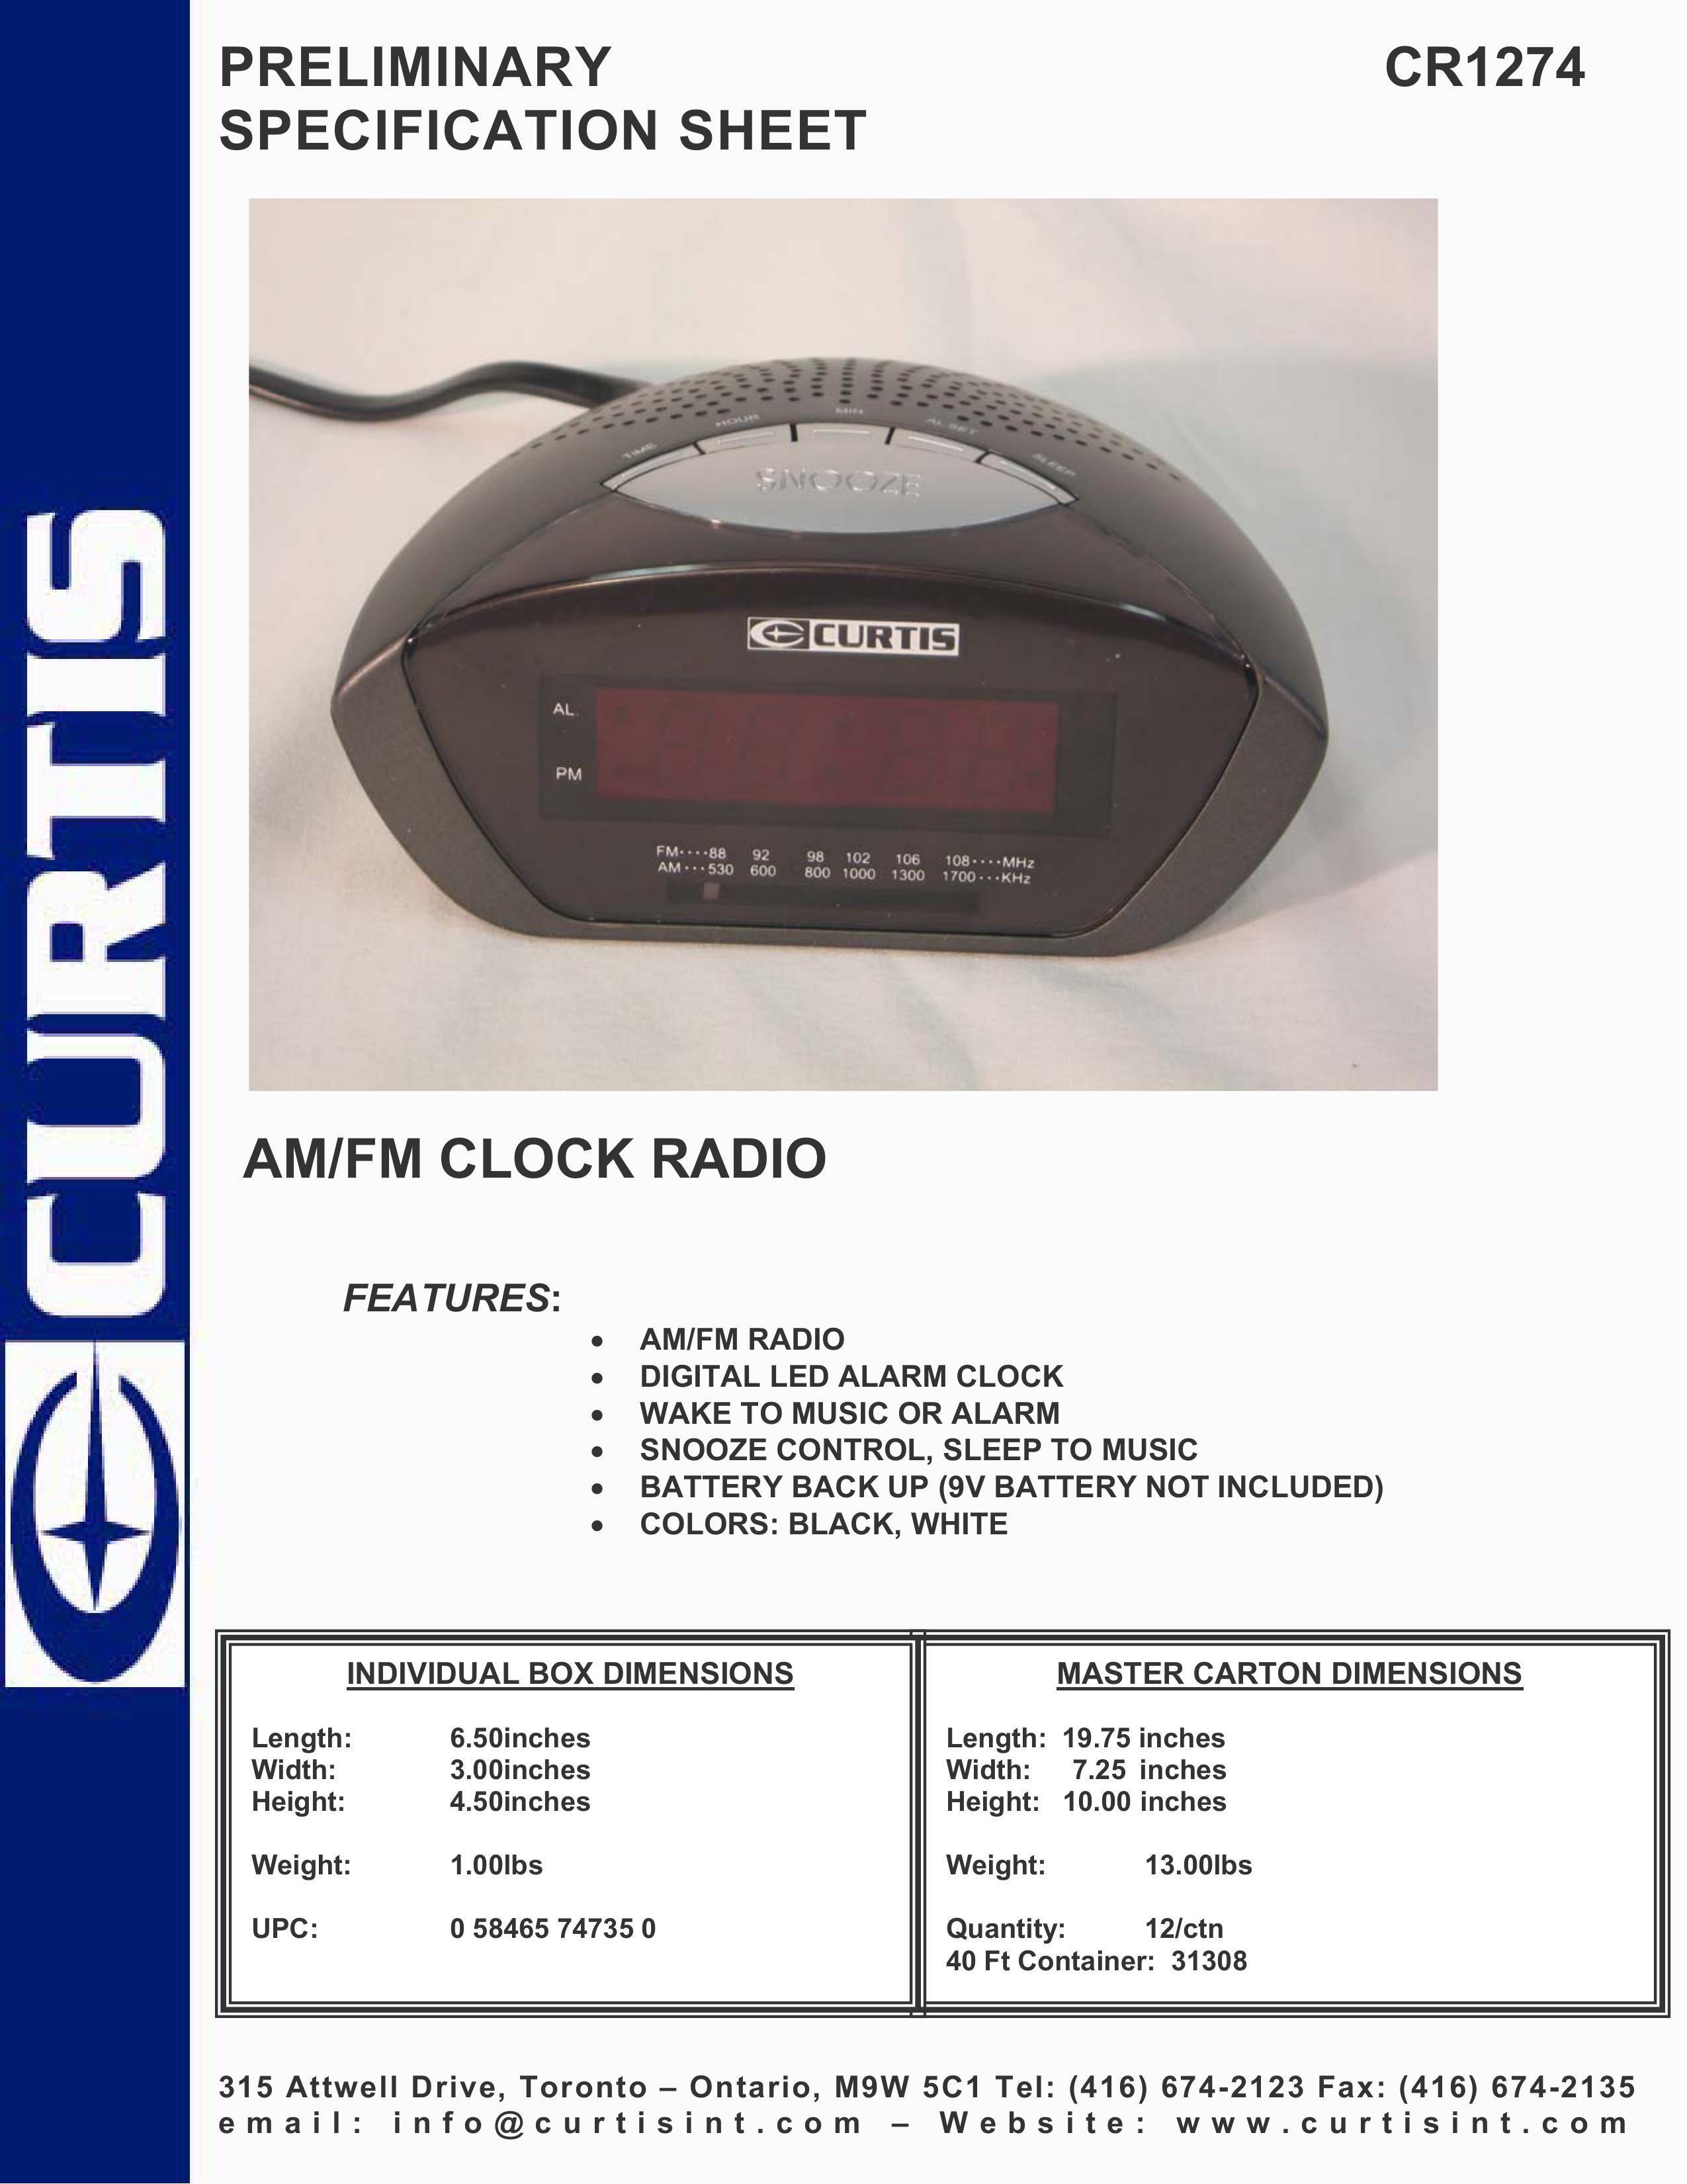 Curtis cr1274 Clock Radio User Manual